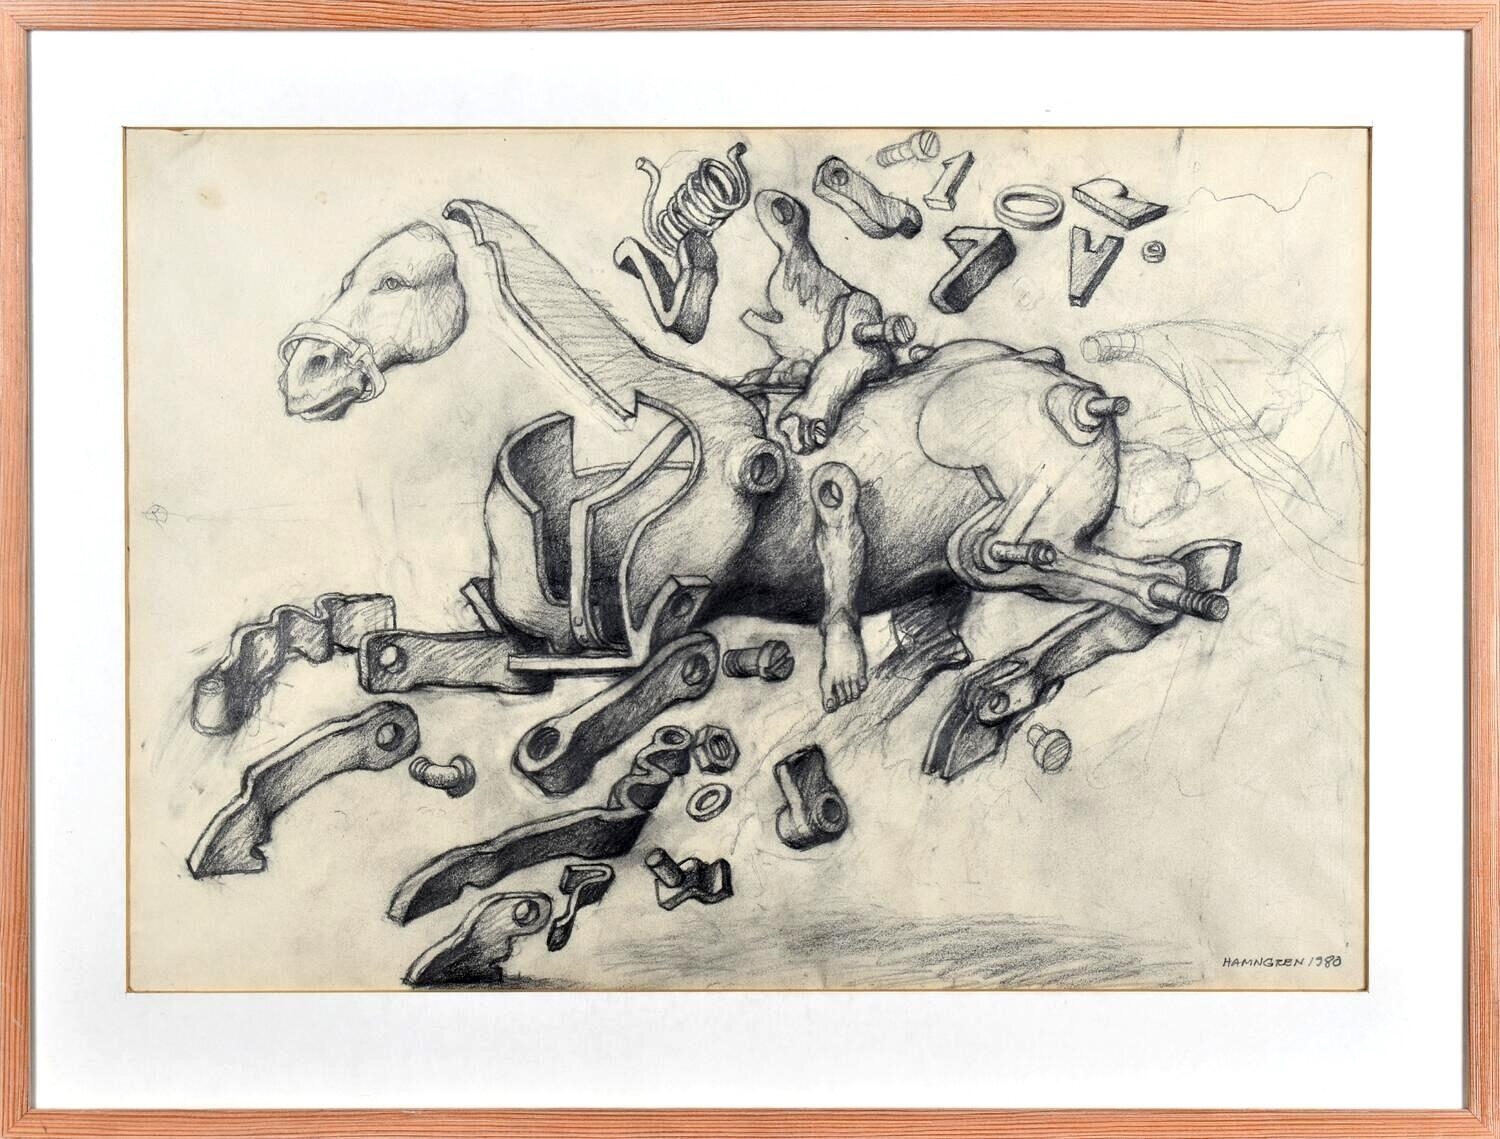 Sketch of mechanical horse by Hans Hamngren, 1980